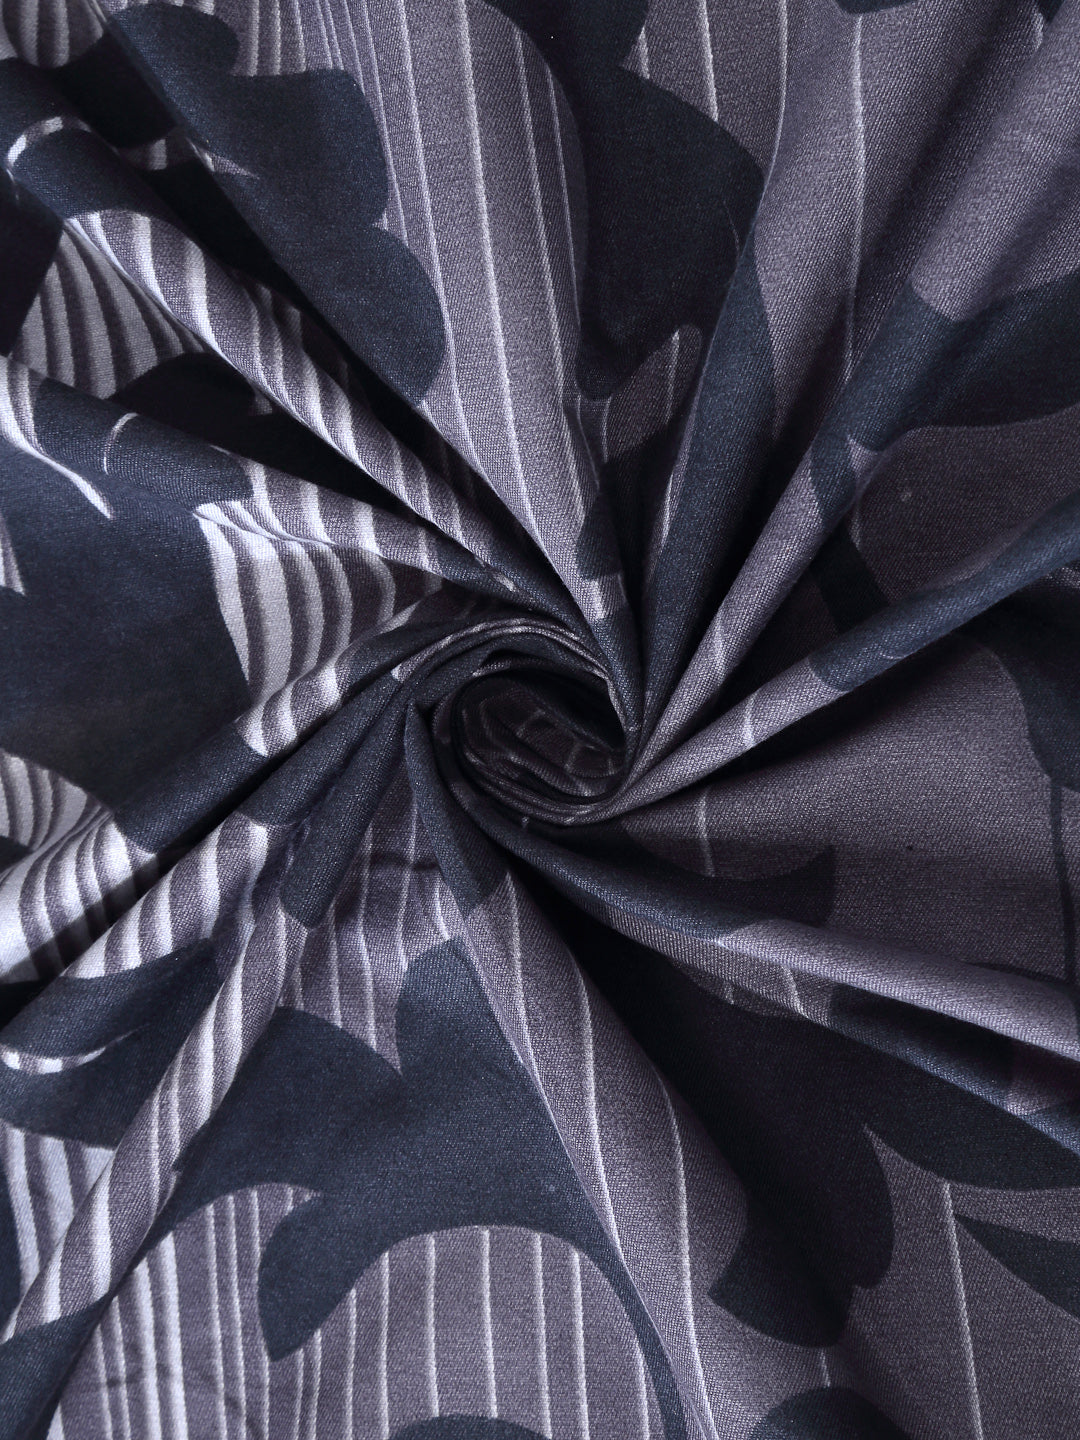 Arrabi Black Floral TC Cotton Blend King Size Bookfold Bedsheet with 2 Pillow Covers (250 X 215 cm)